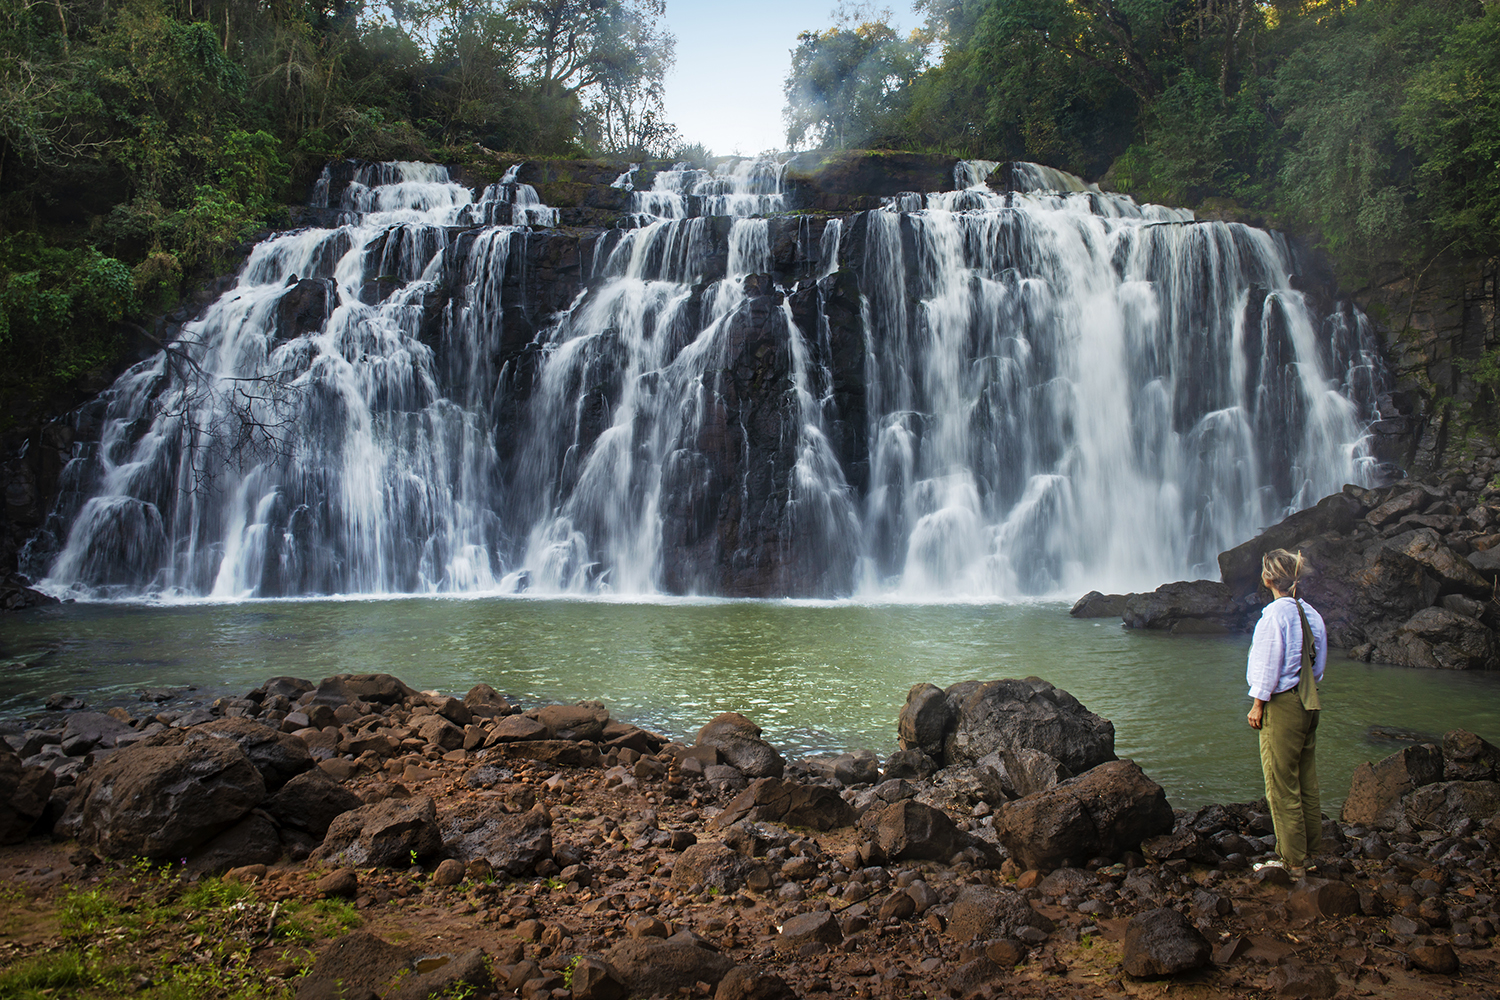 Iguazu Falls: Unlike any other waterfall on Earth